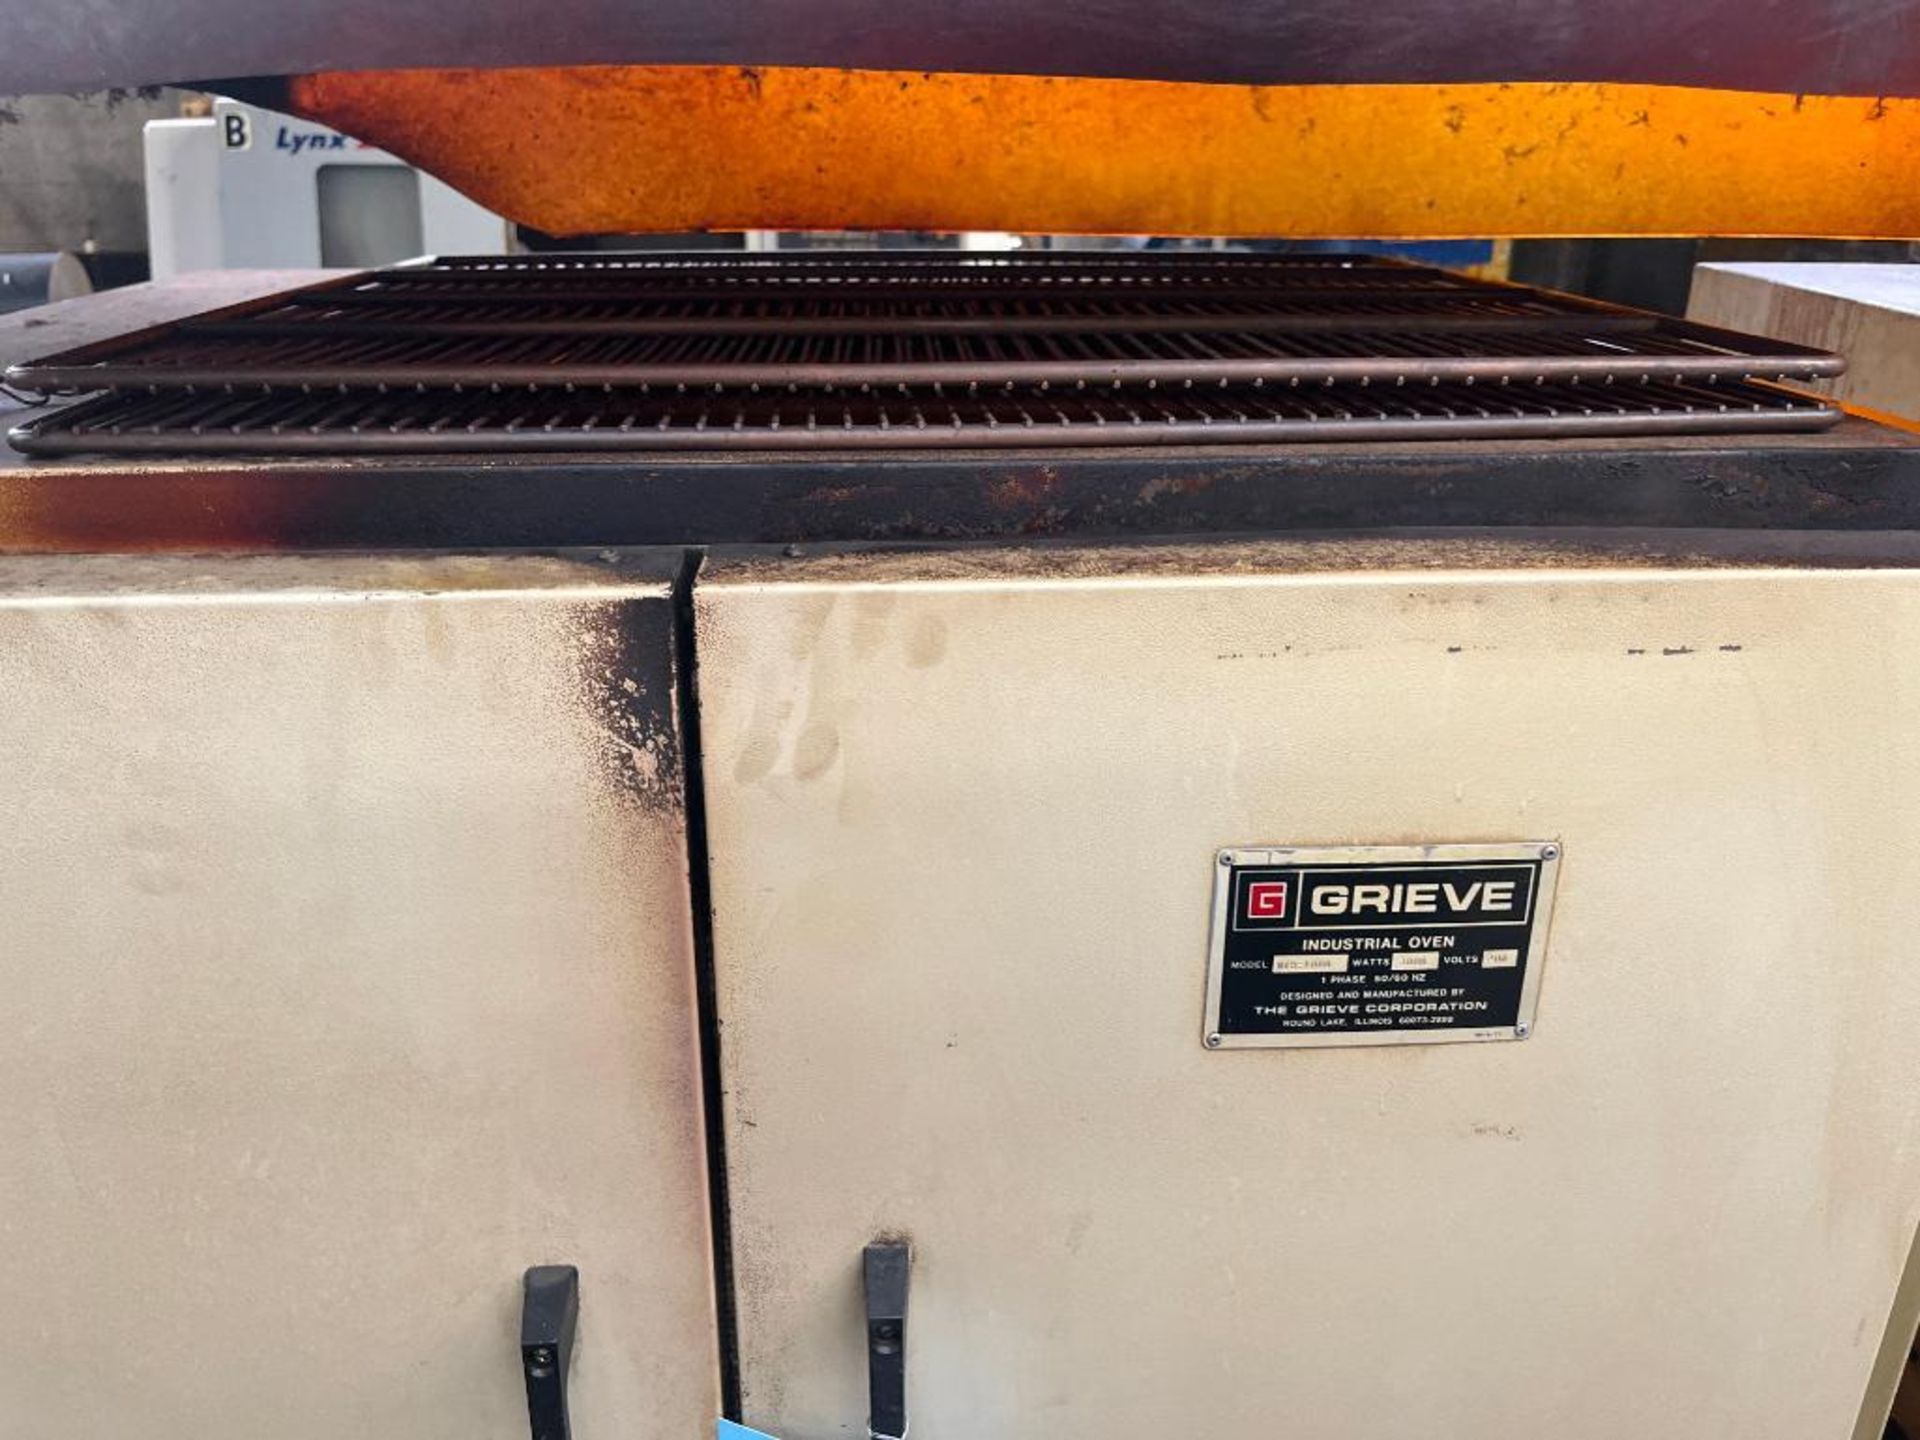 Grieve Double-Door Bench Top Electric Oven Model MTR-1000, 3000 Watts, 208 Volts, Partlow Controls - Image 4 of 7